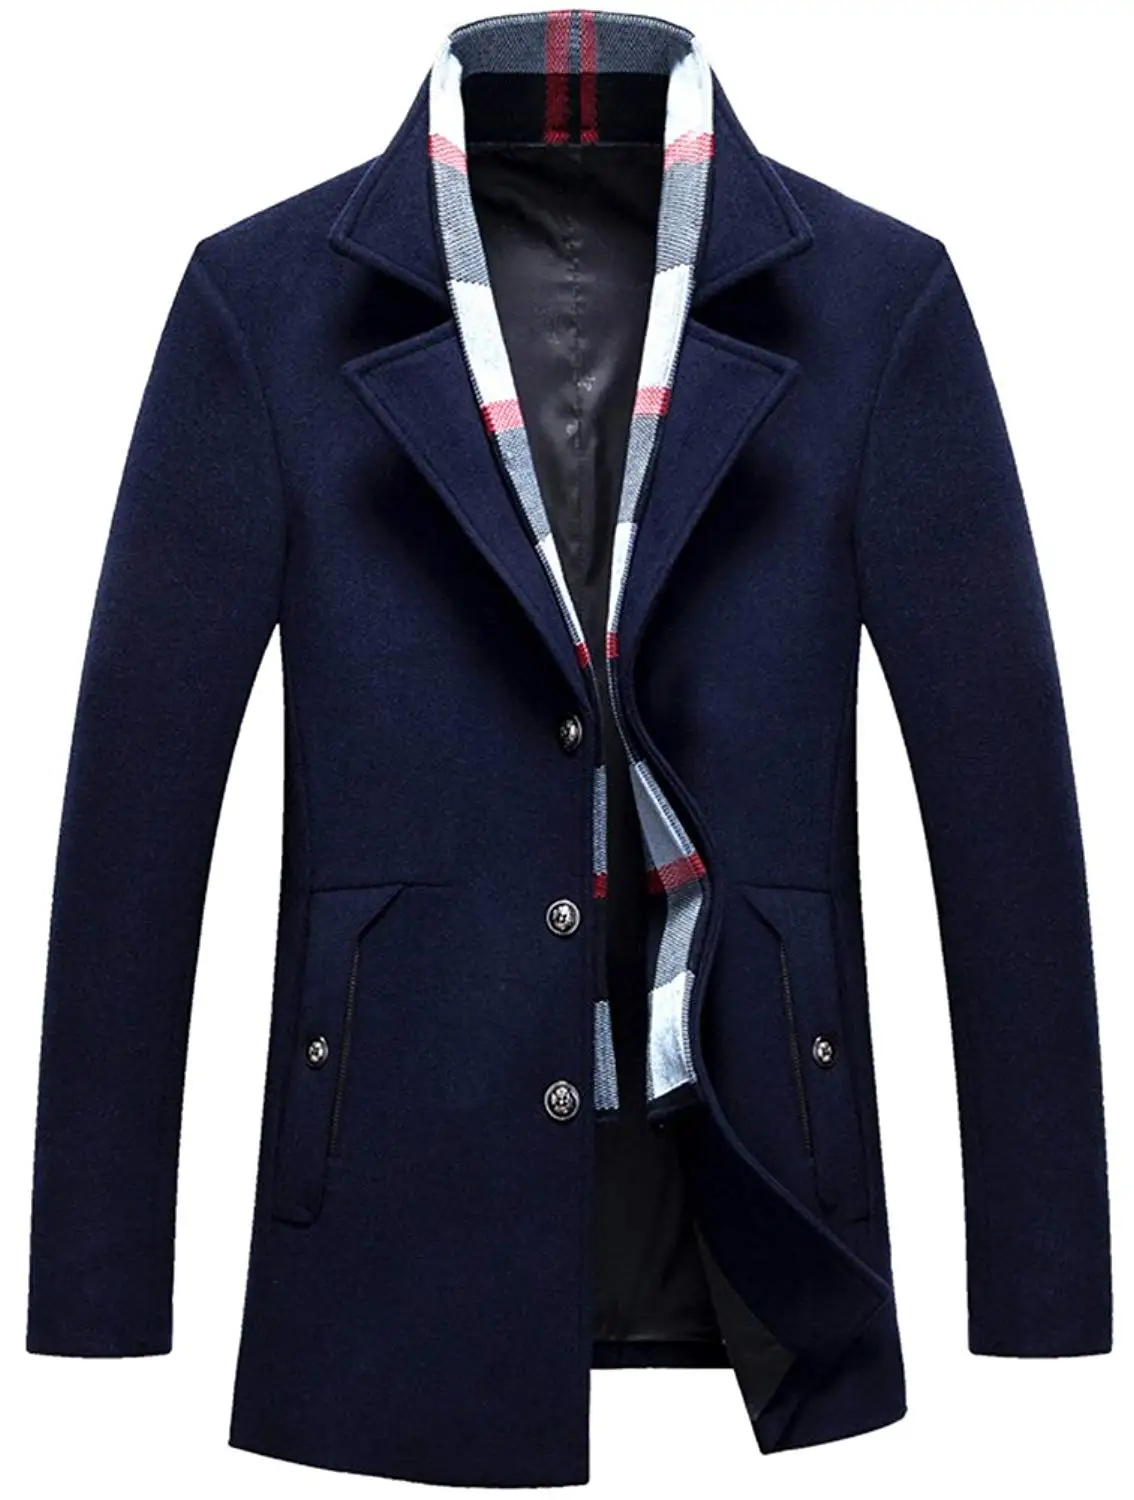 Cheap Shawl Collar Coat Pattern, find Shawl Collar Coat Pattern deals ...